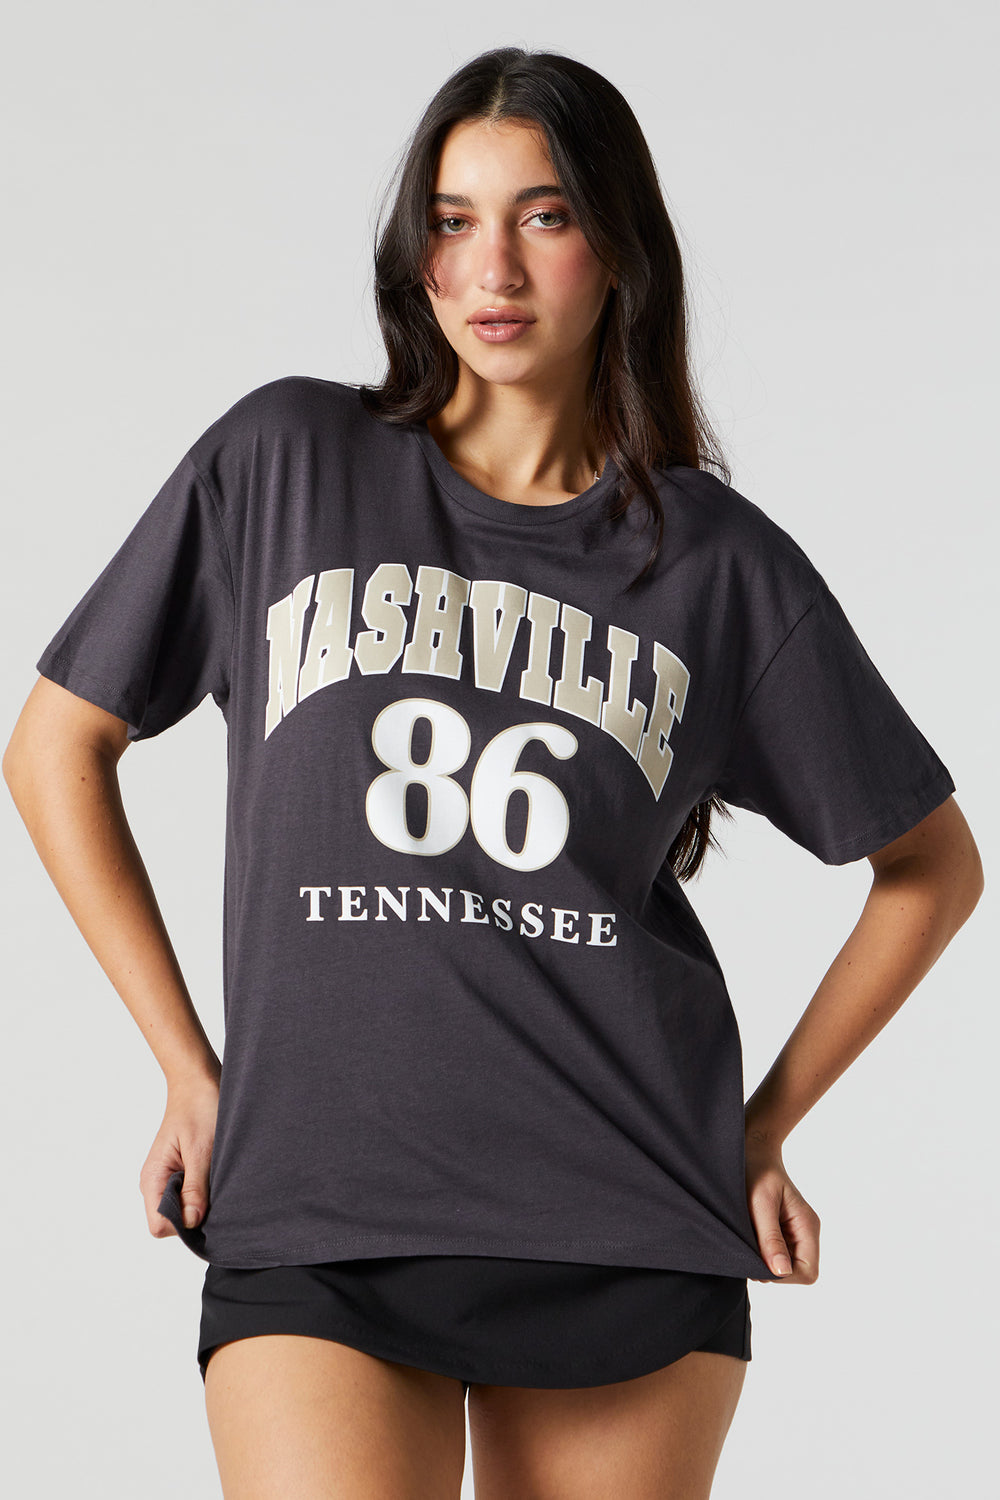 Nashville Graphic Boyfriend T-Shirt Nashville Graphic Boyfriend T-Shirt 2